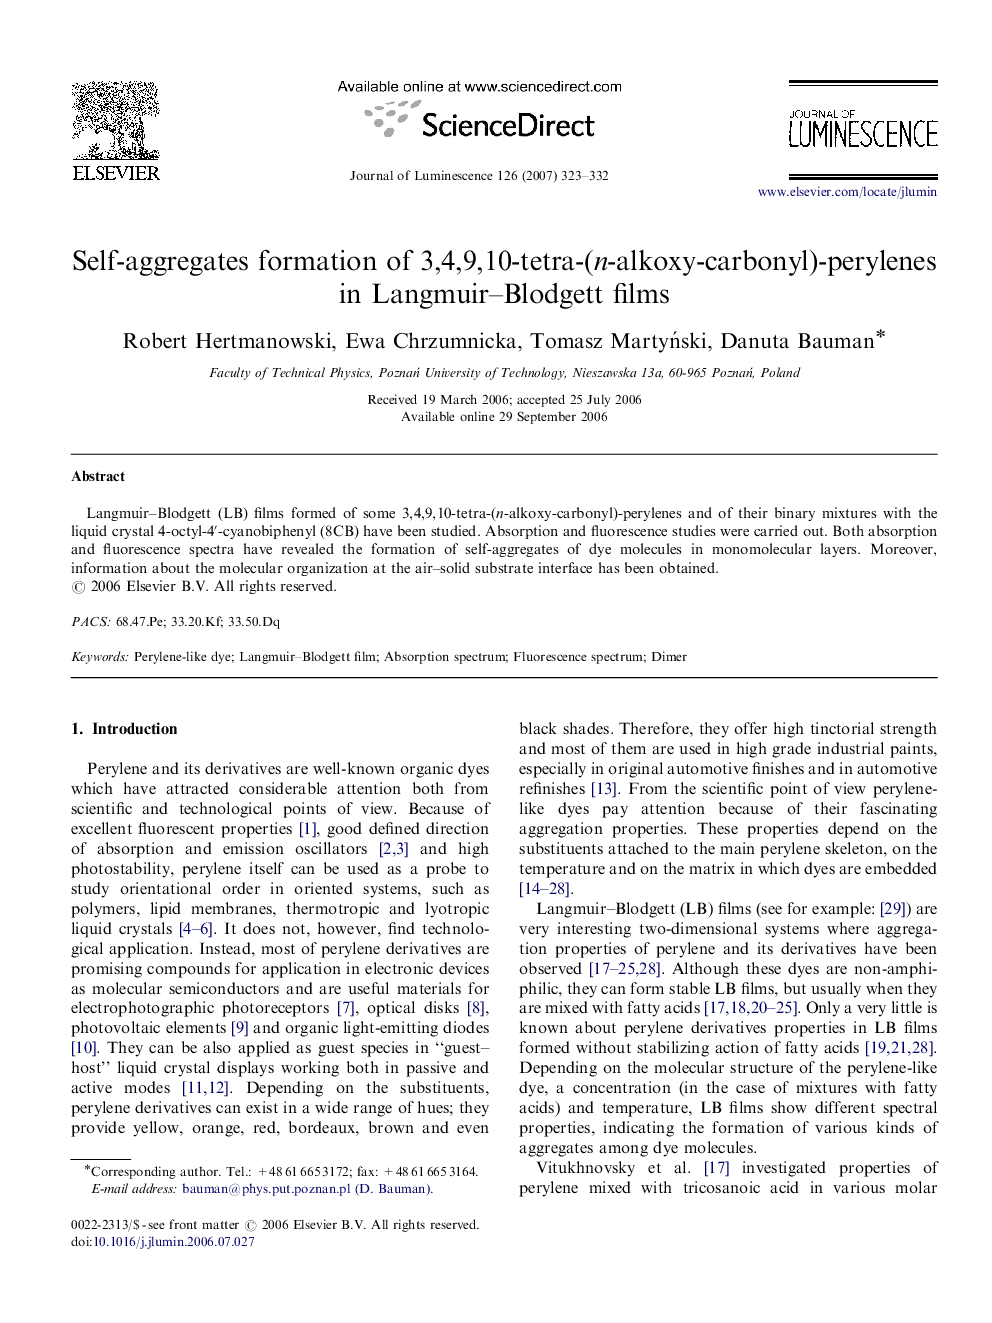 Self-aggregates formation of 3,4,9,10-tetra-(n-alkoxy-carbonyl)-perylenes in Langmuir-Blodgett films